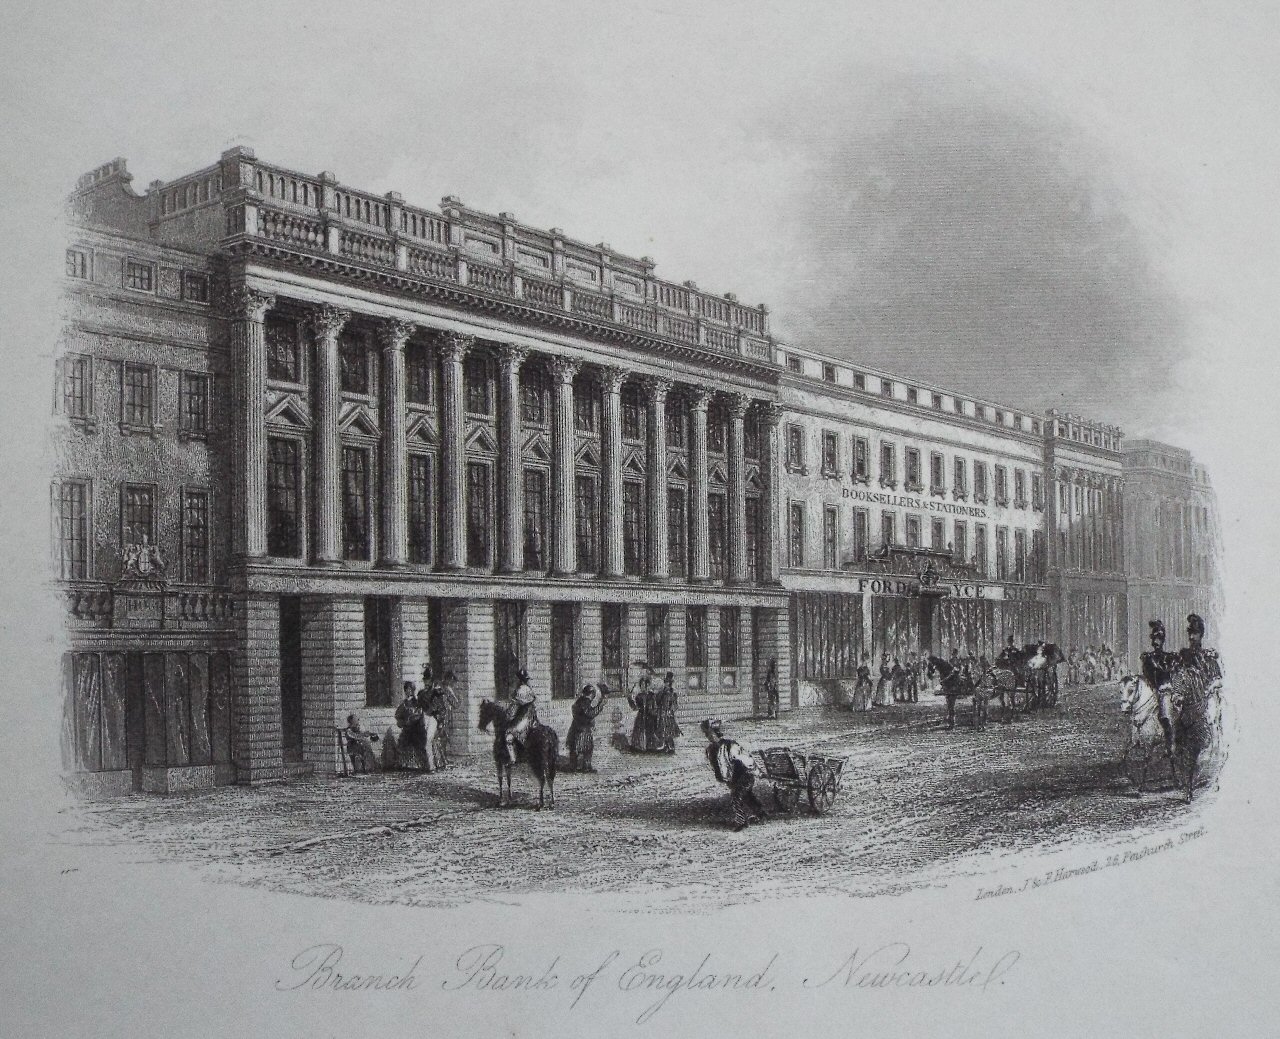 Print - Branch Bank of England, Newcastle. - J